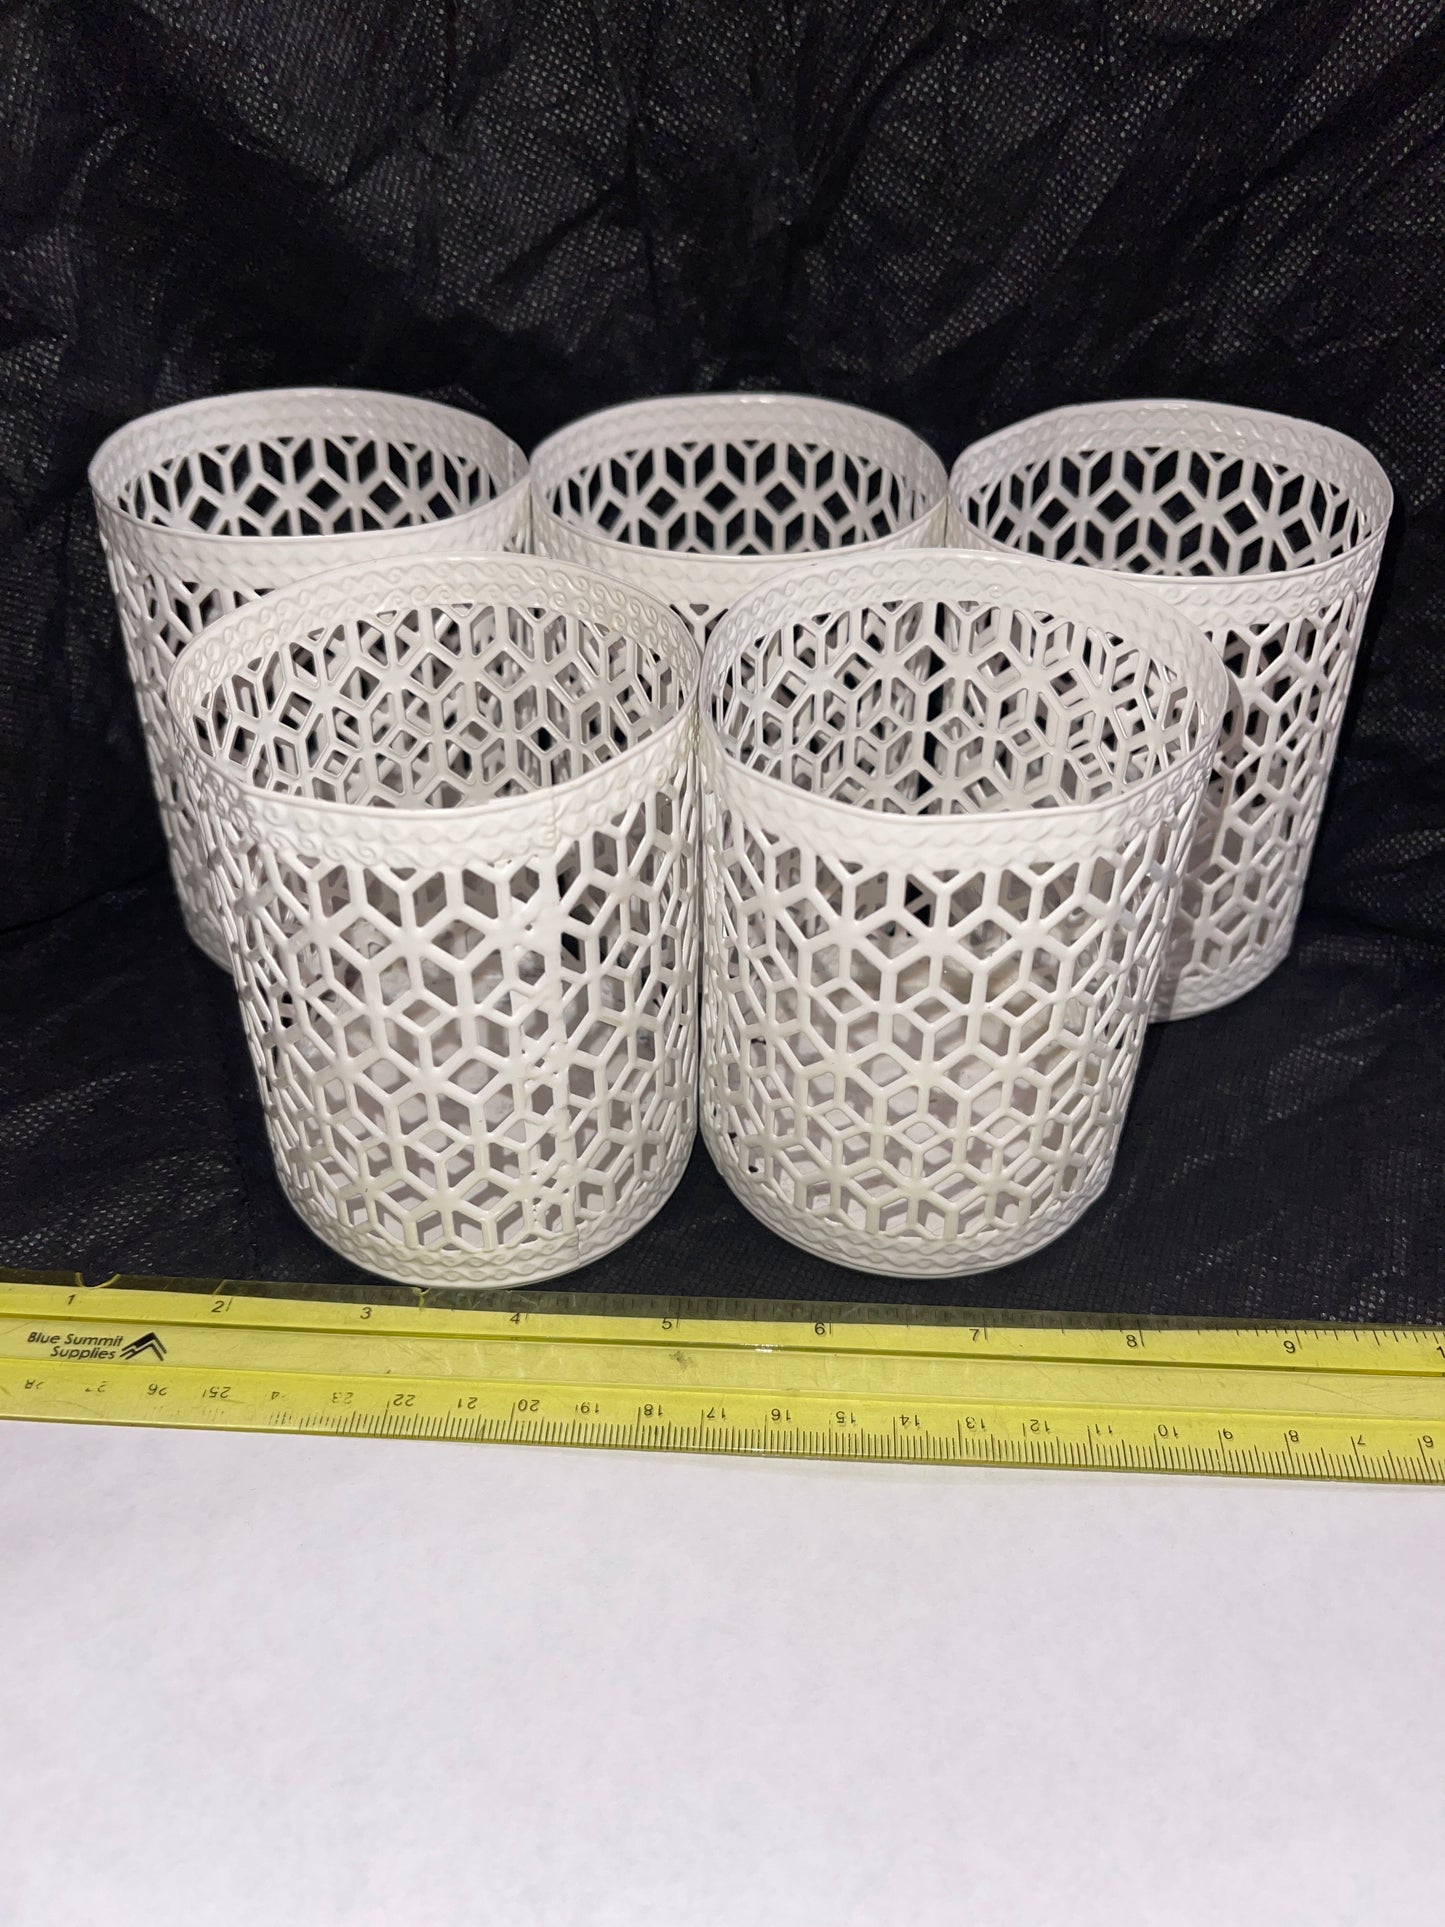 Rental vintage white metal lace cups